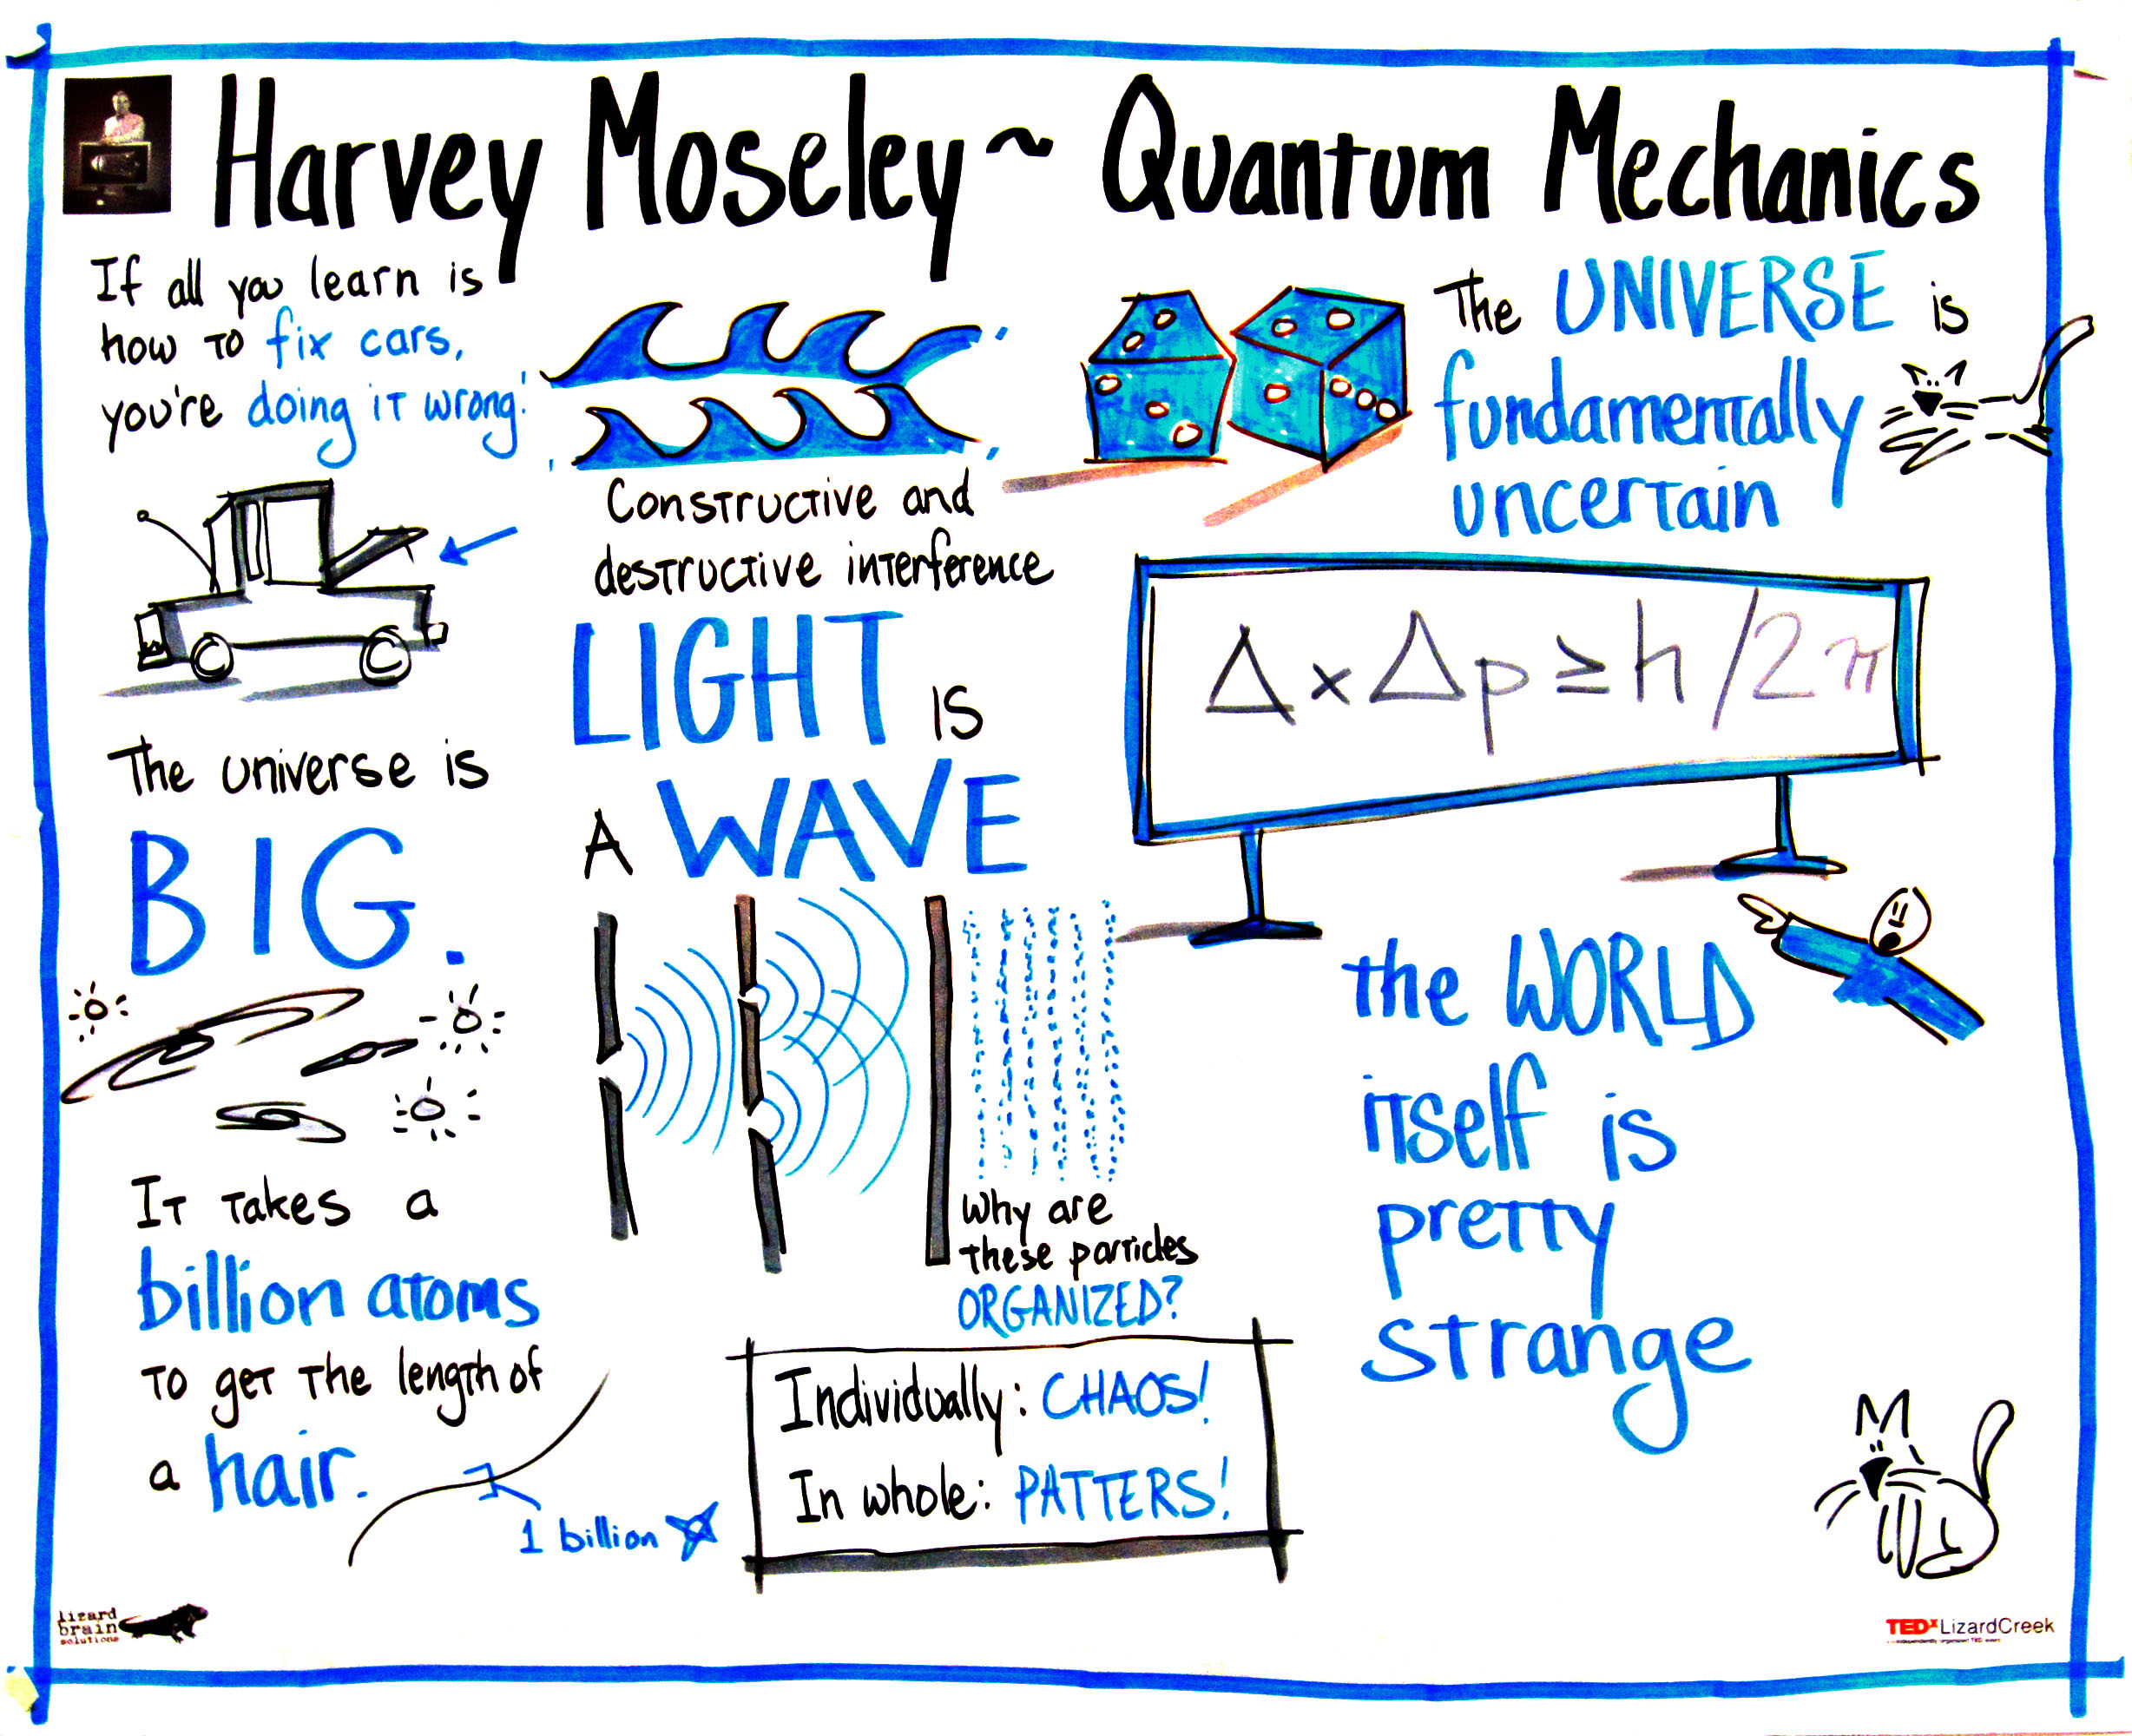 Harvey Moseley.jpg